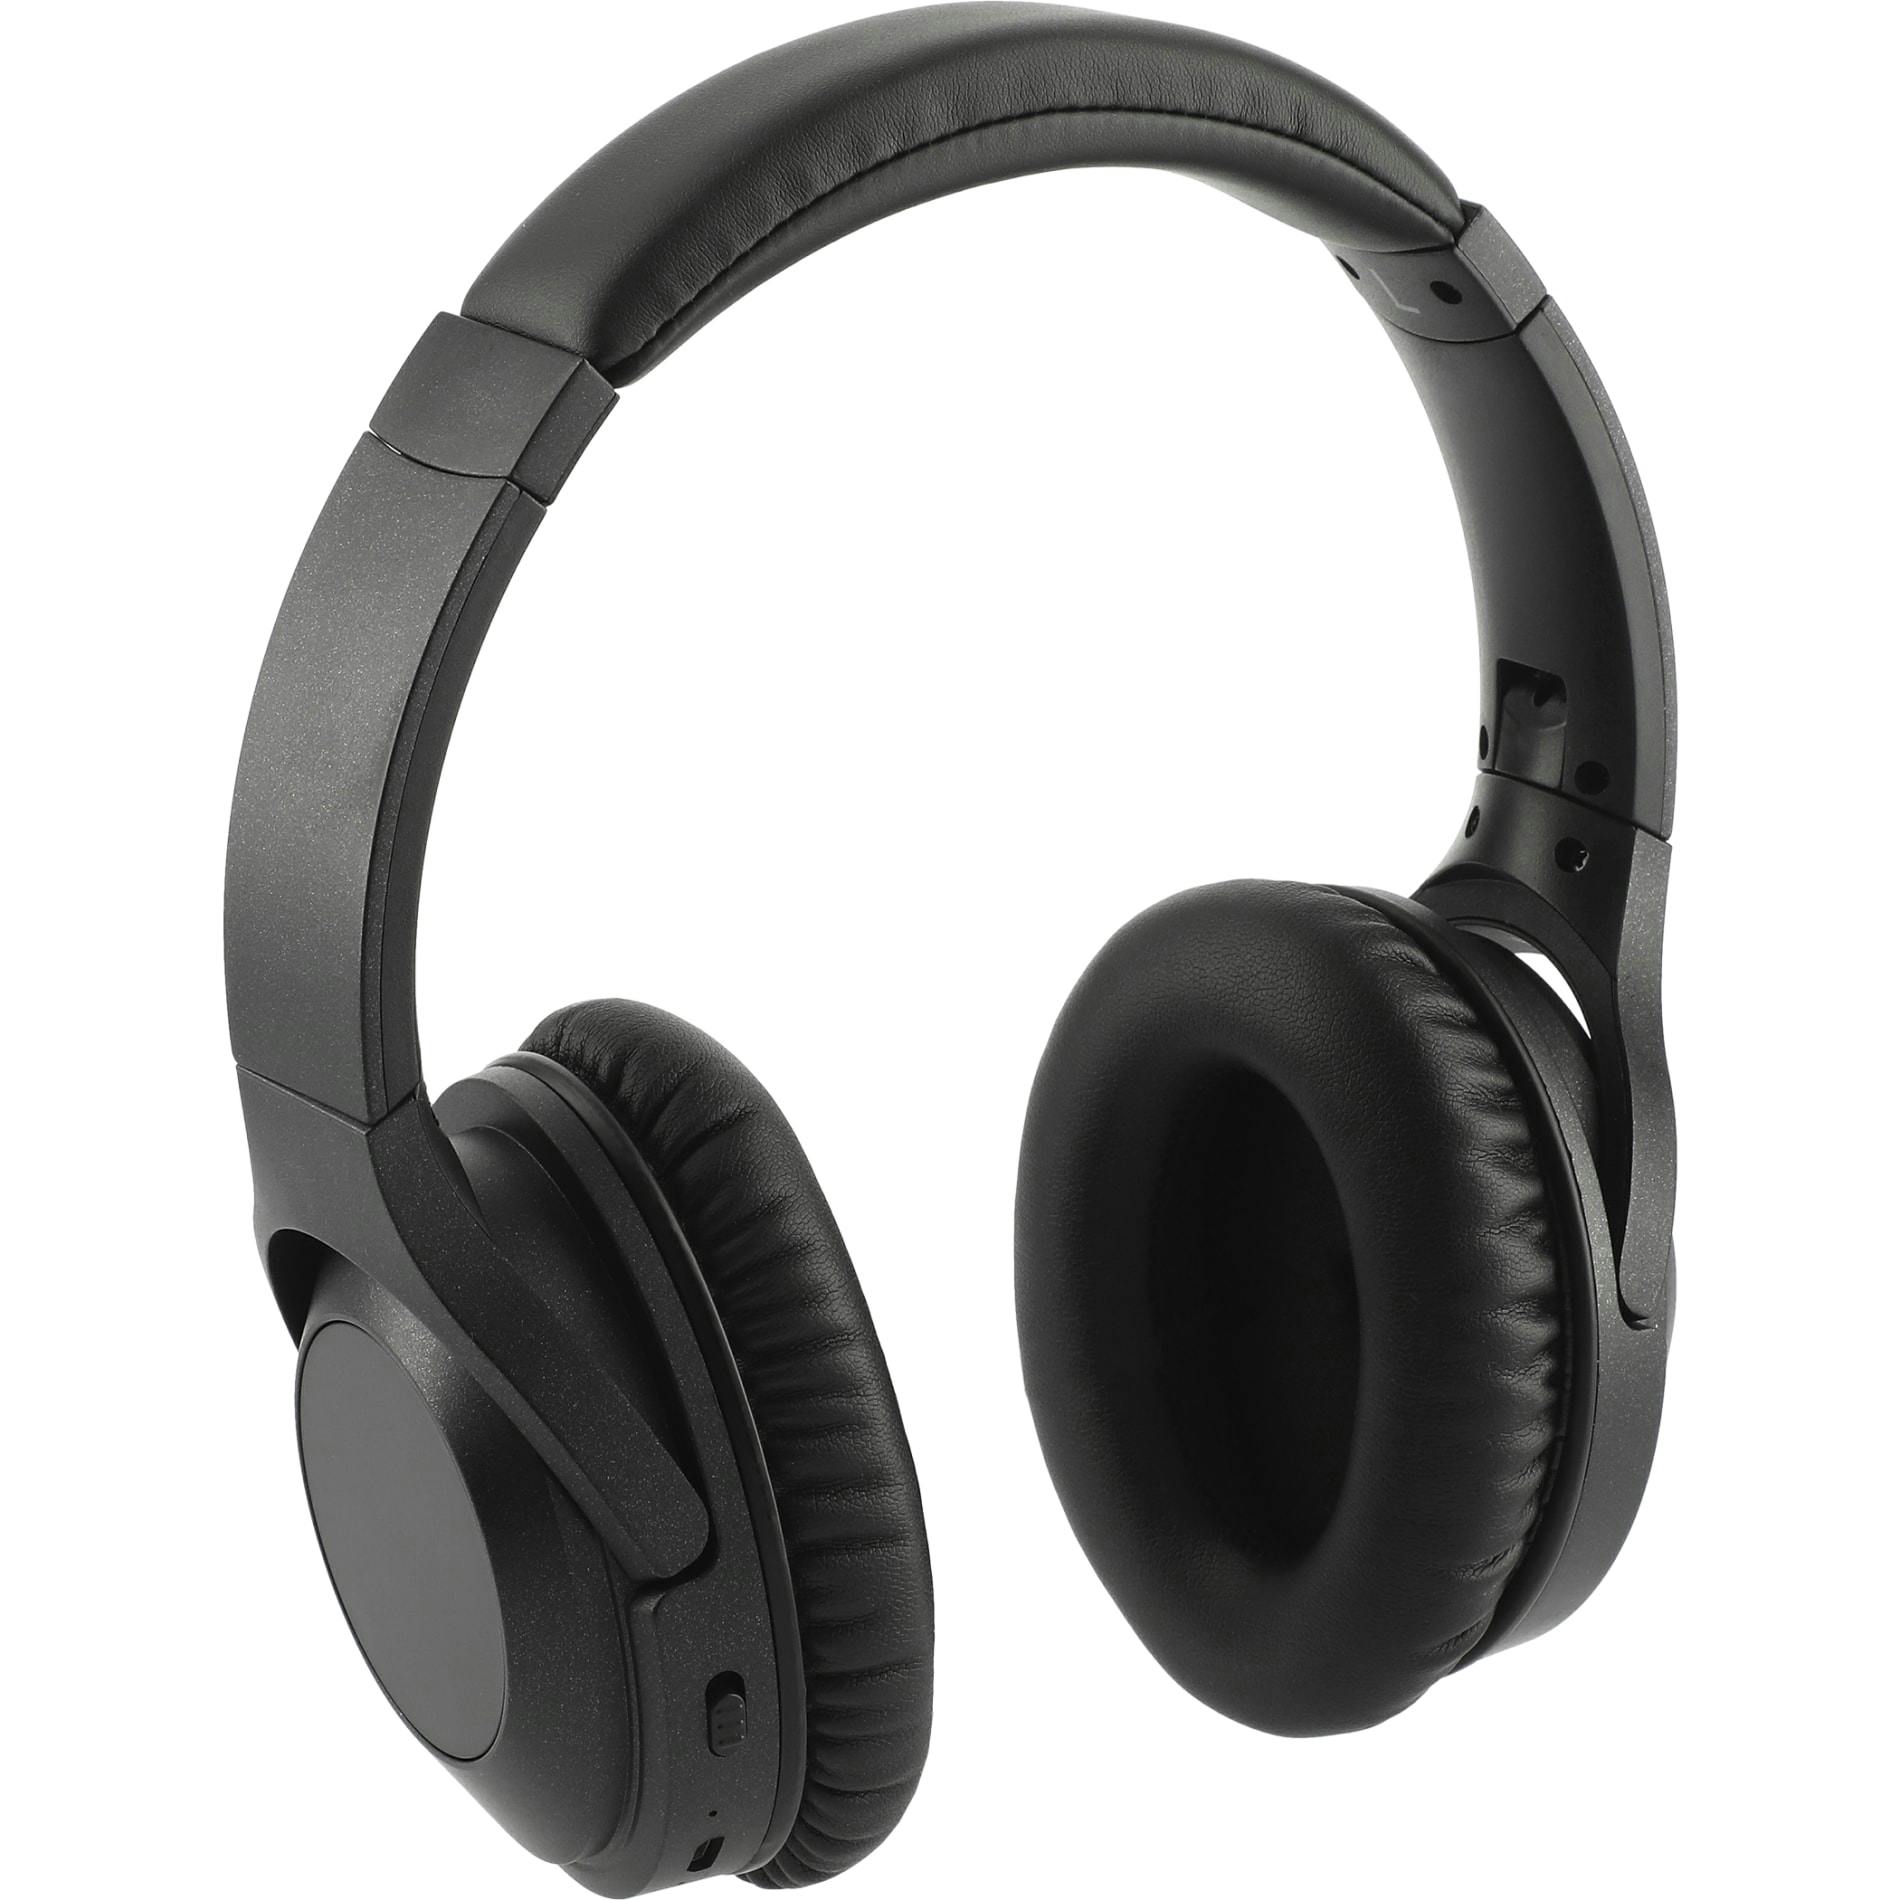 Hush Active Noise Cancellation Bluetooth Headphone - additional Image 4